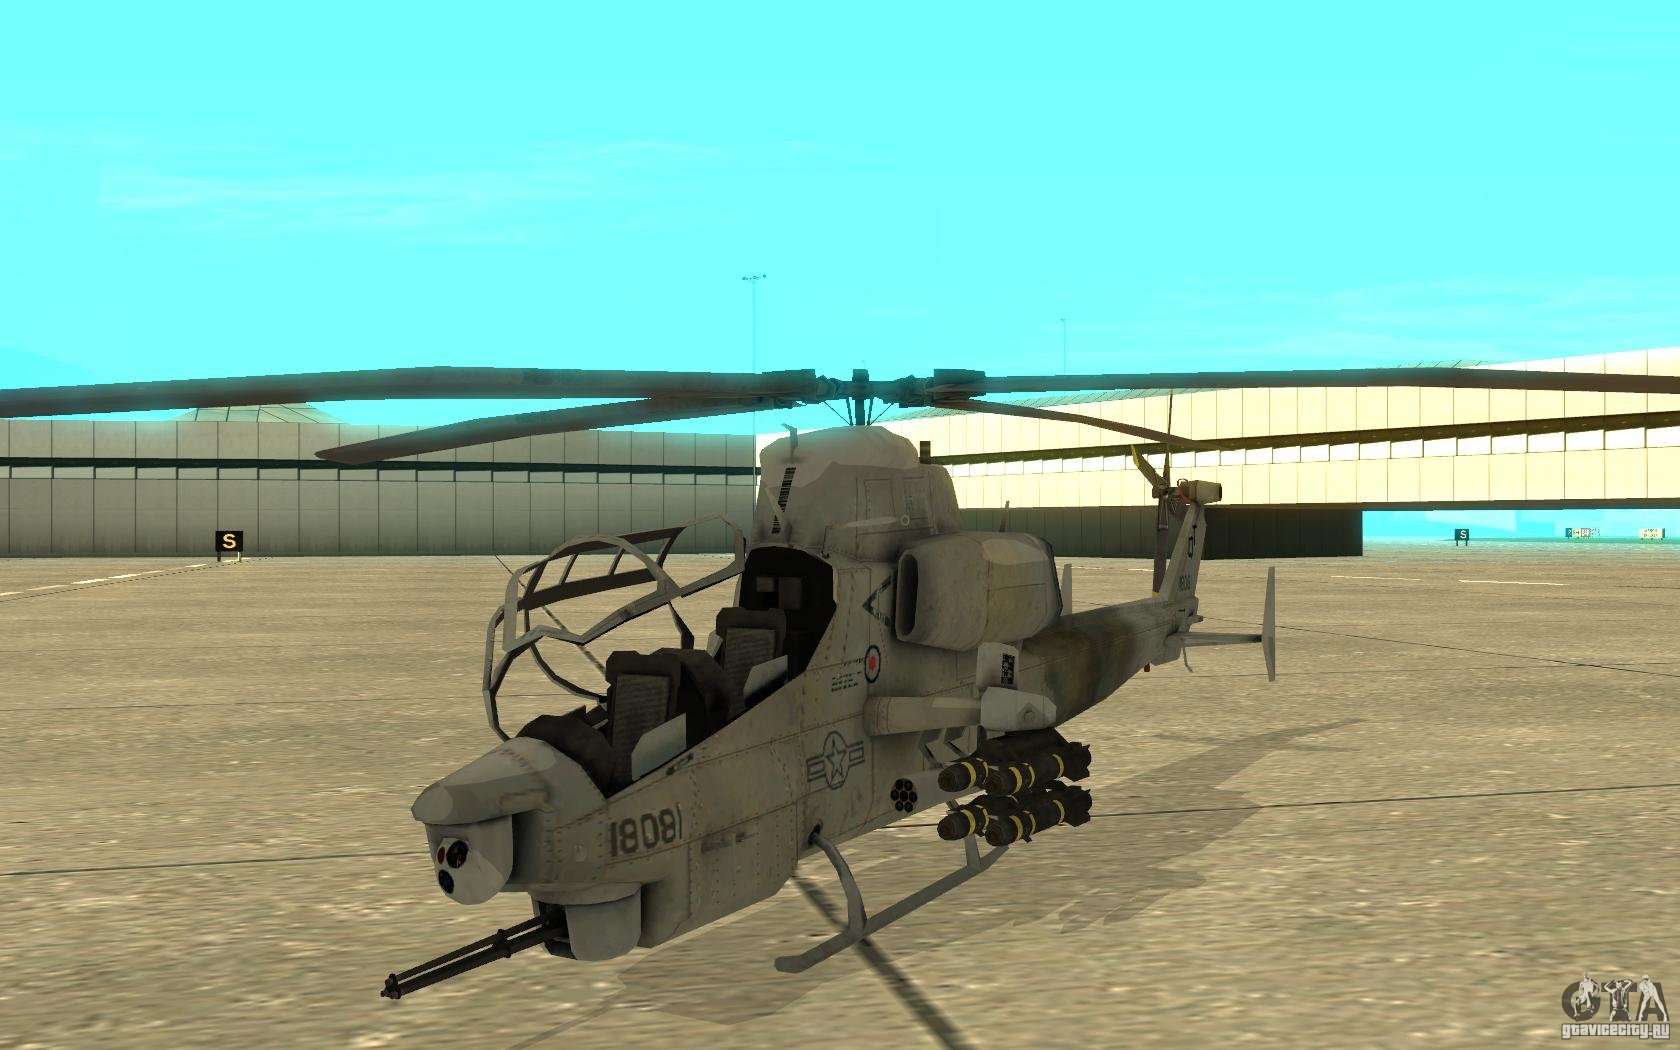 Гта мод вертолет. GTA sa вертолет. GTA San Andreas вертолет. Вертолет Hunter GTA San Andreas. ГТА Сан андреас вертолет Хантер.